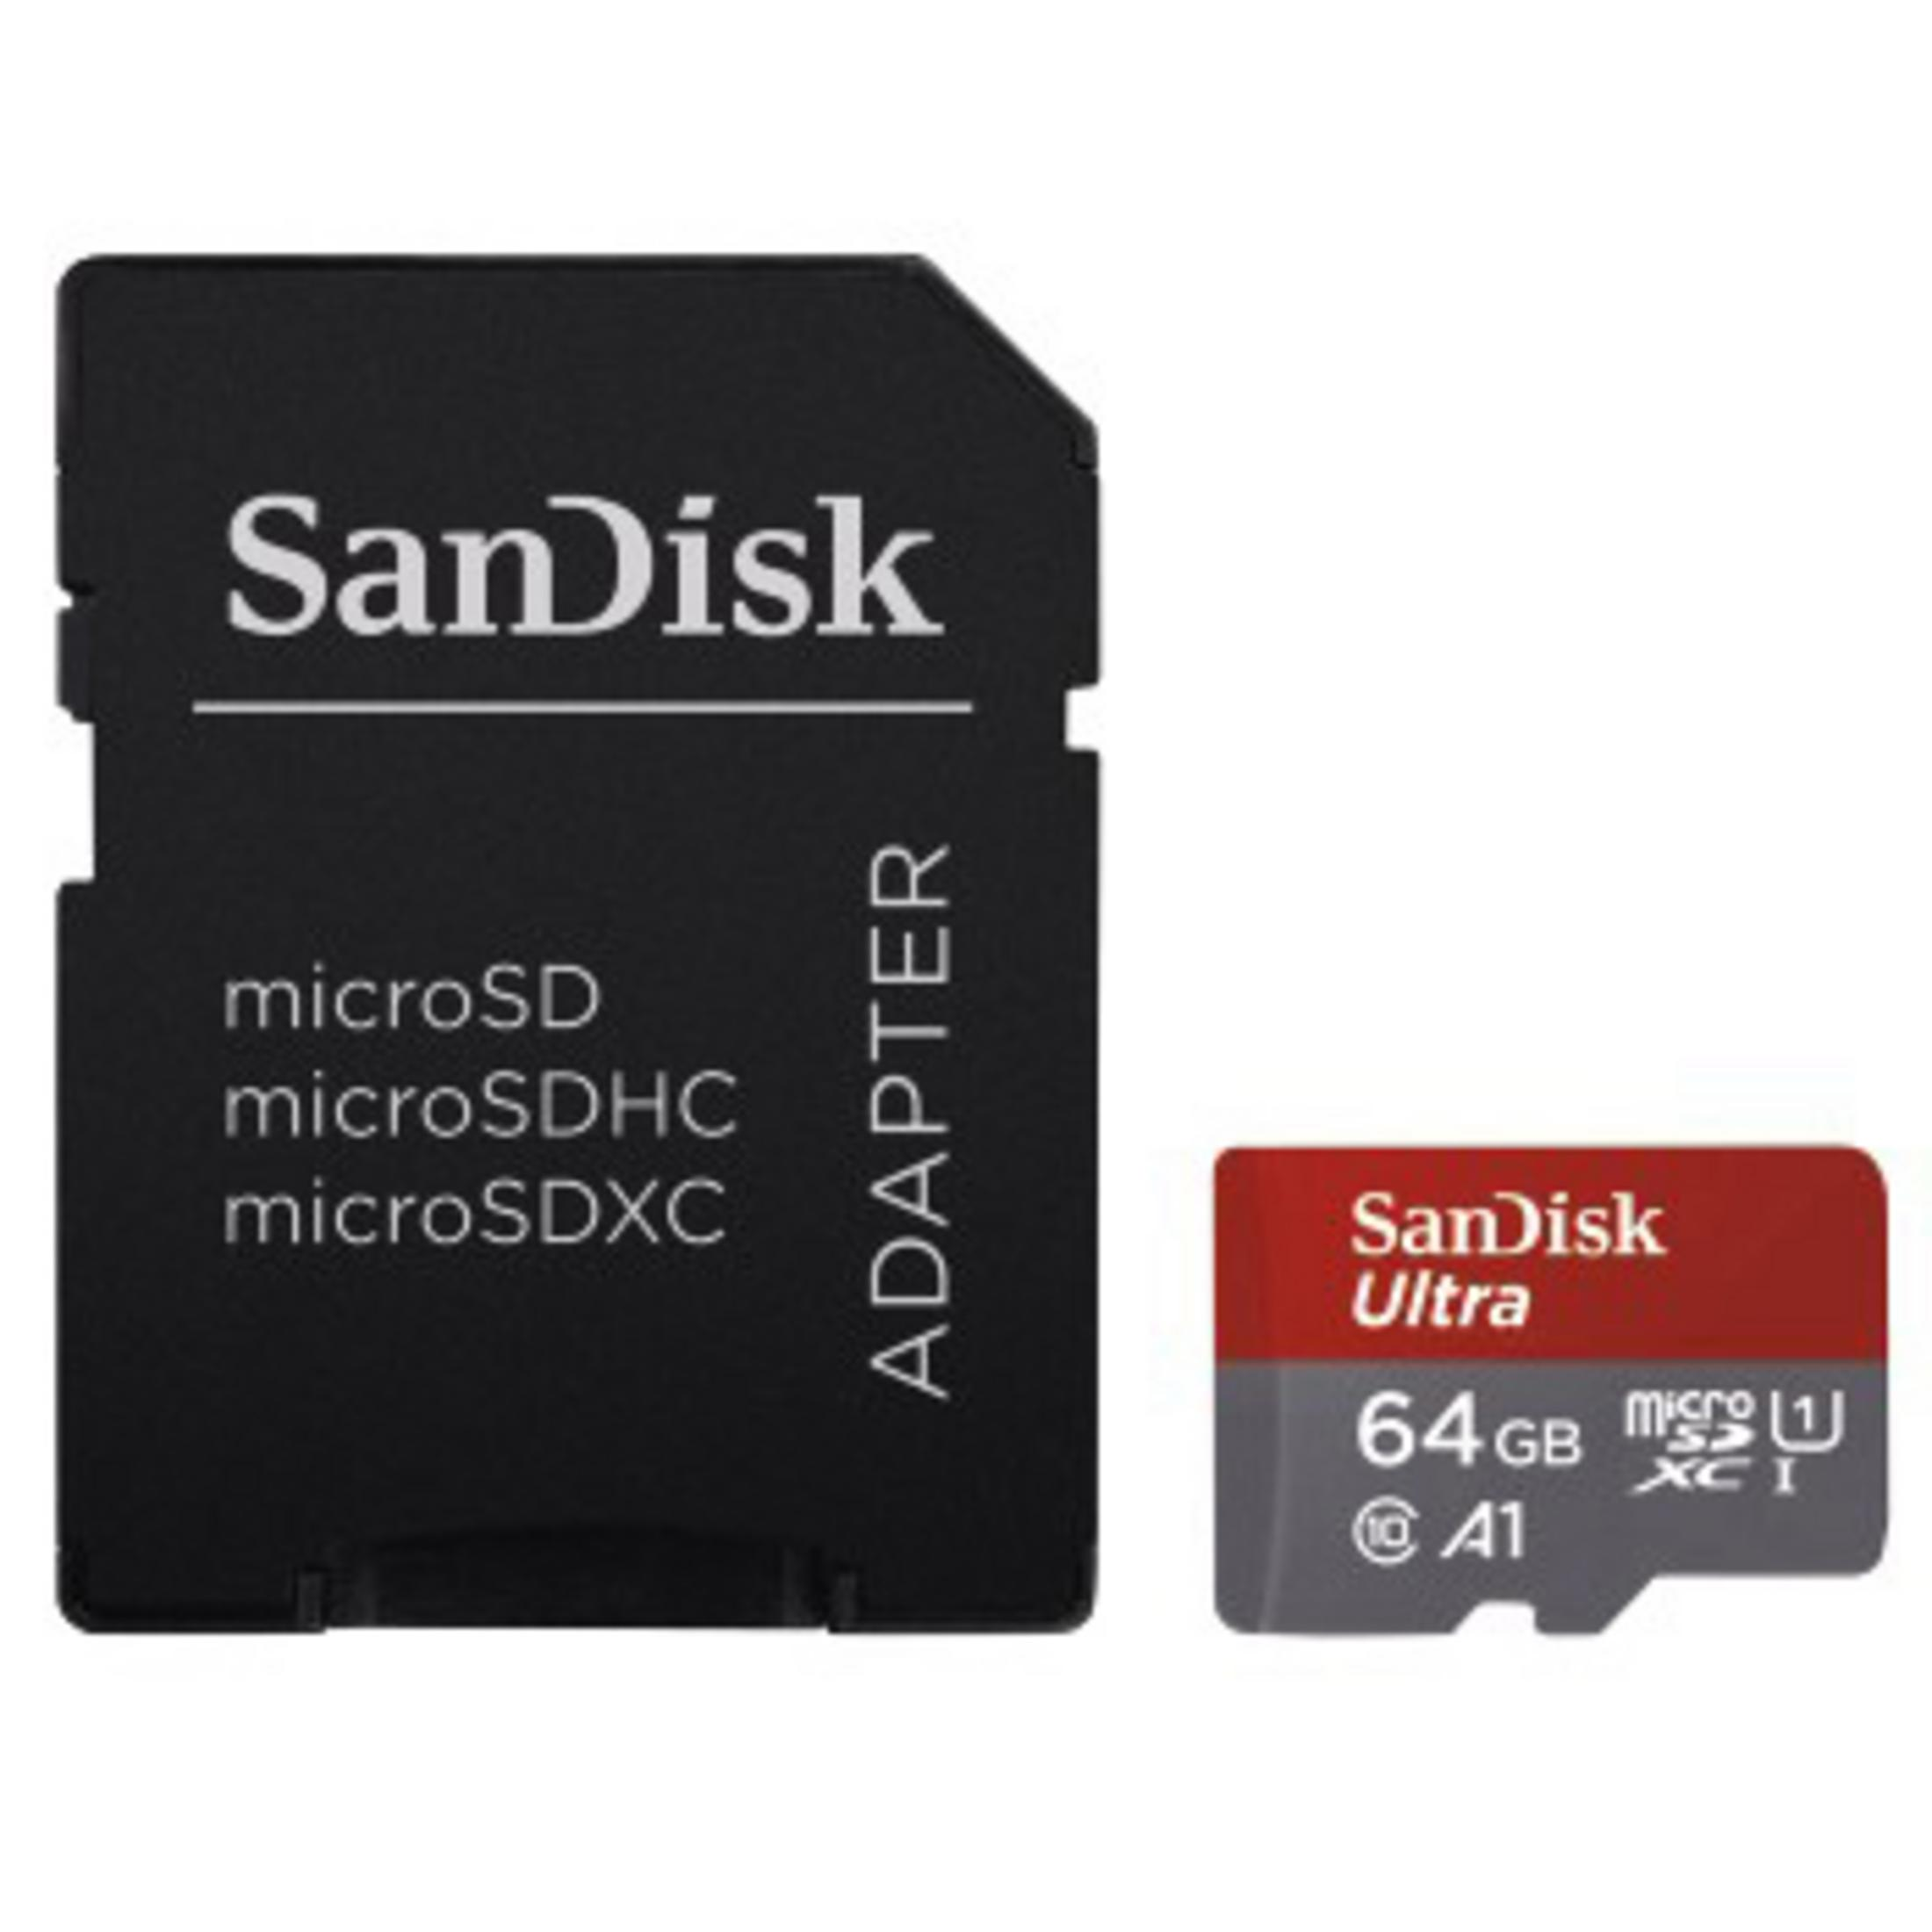 MB/s 64GB 64 100 MSDXC 173448 GB, SANDISK Micro-SDXC (100MB/S,UH, ULTRA Speicherkarte,